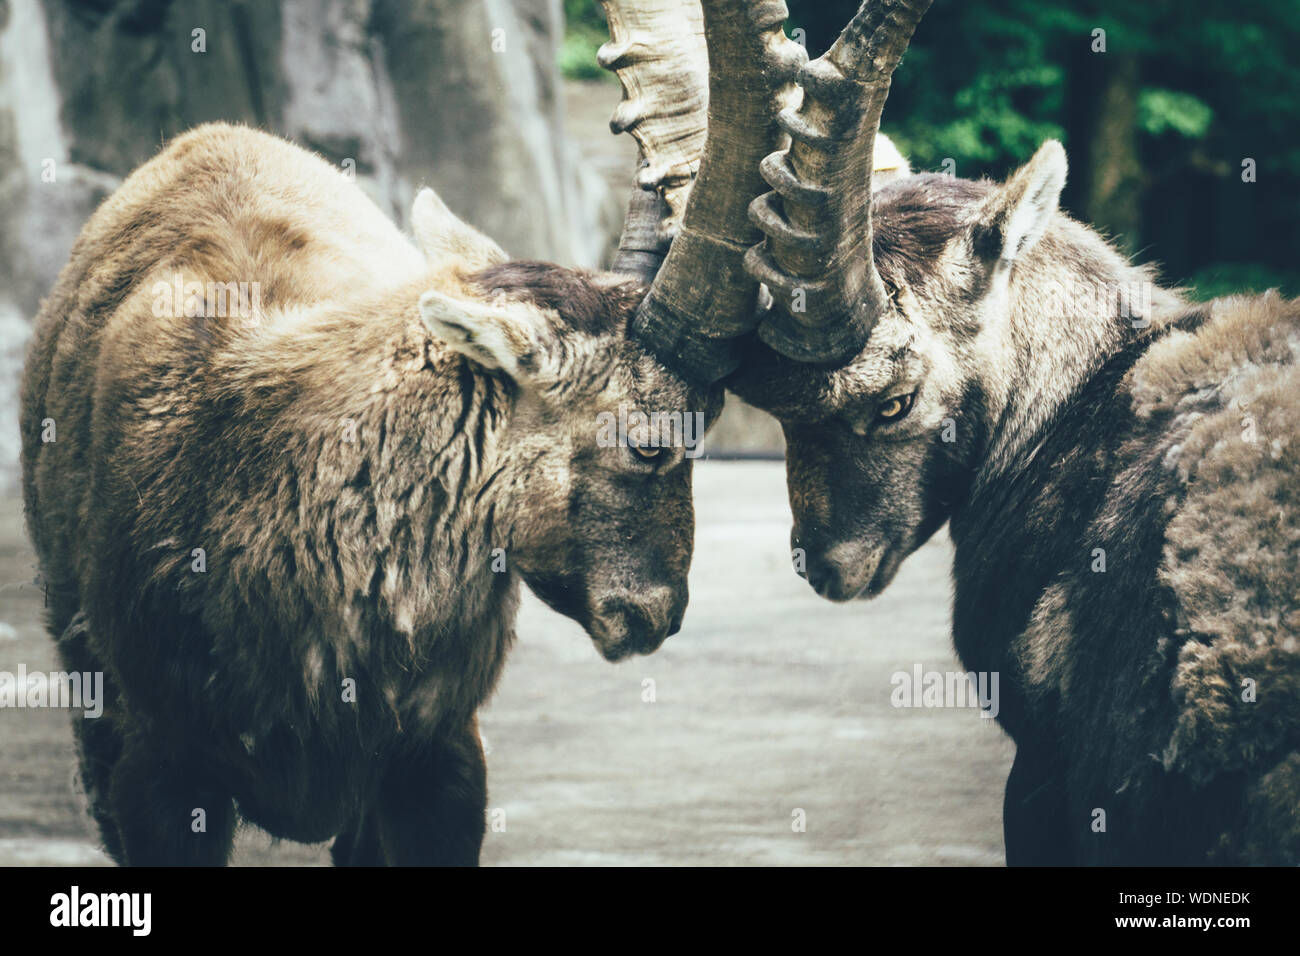 Ibexes Locking Horns Stock Photo